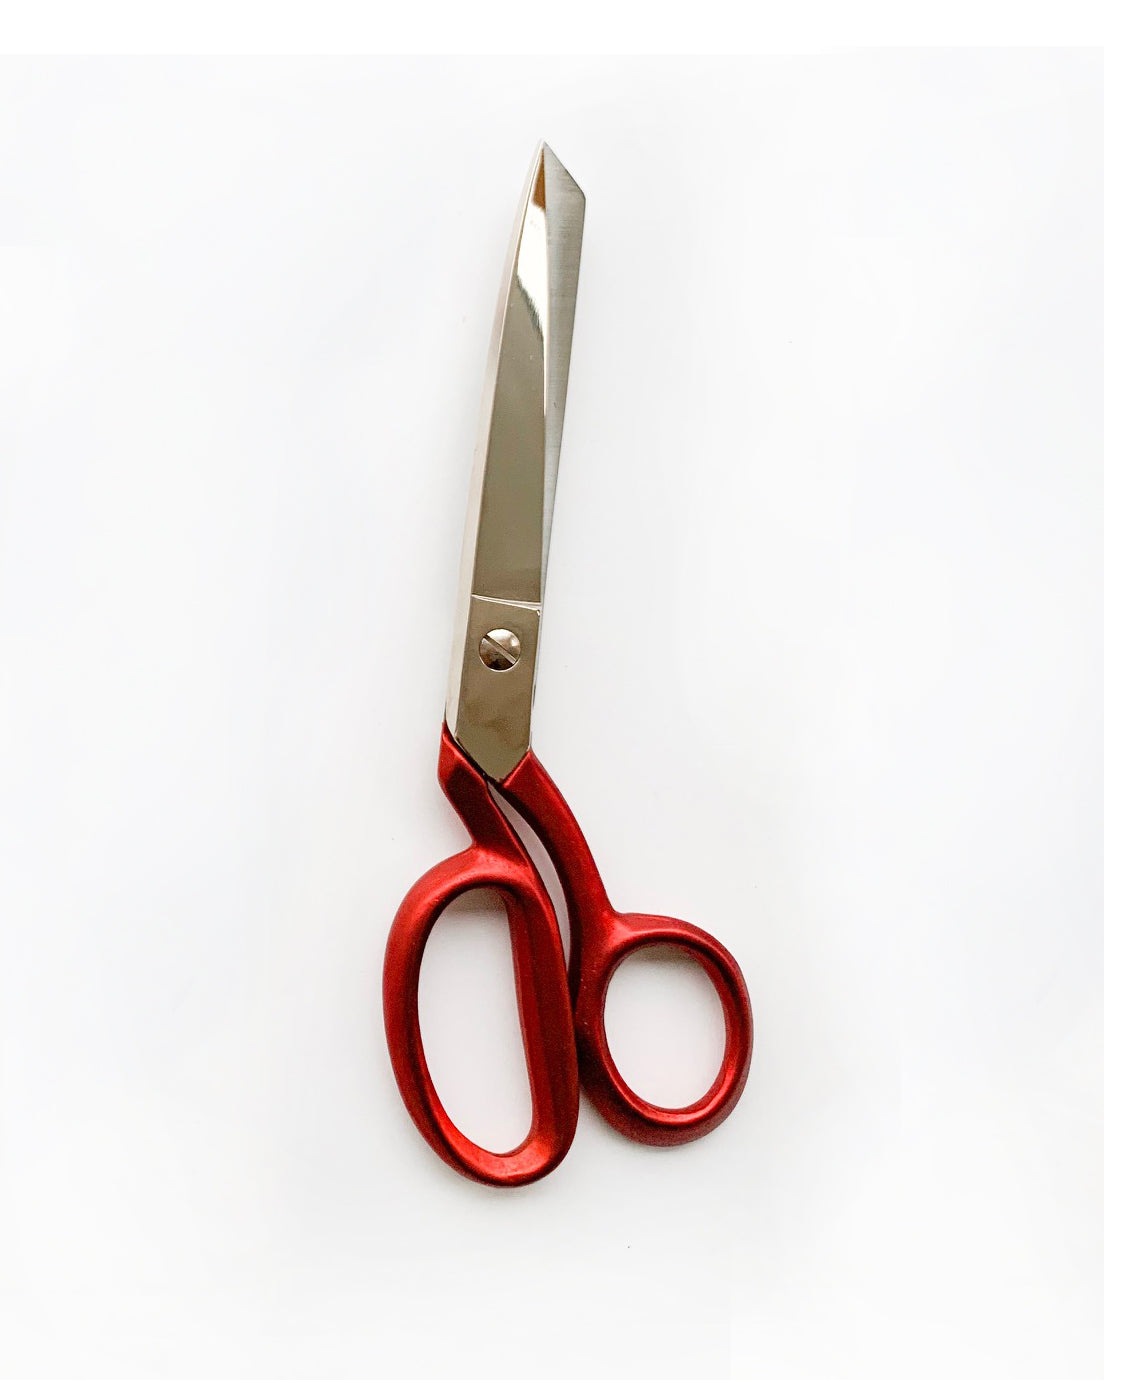 Scarlet red studio carta scissors shop –